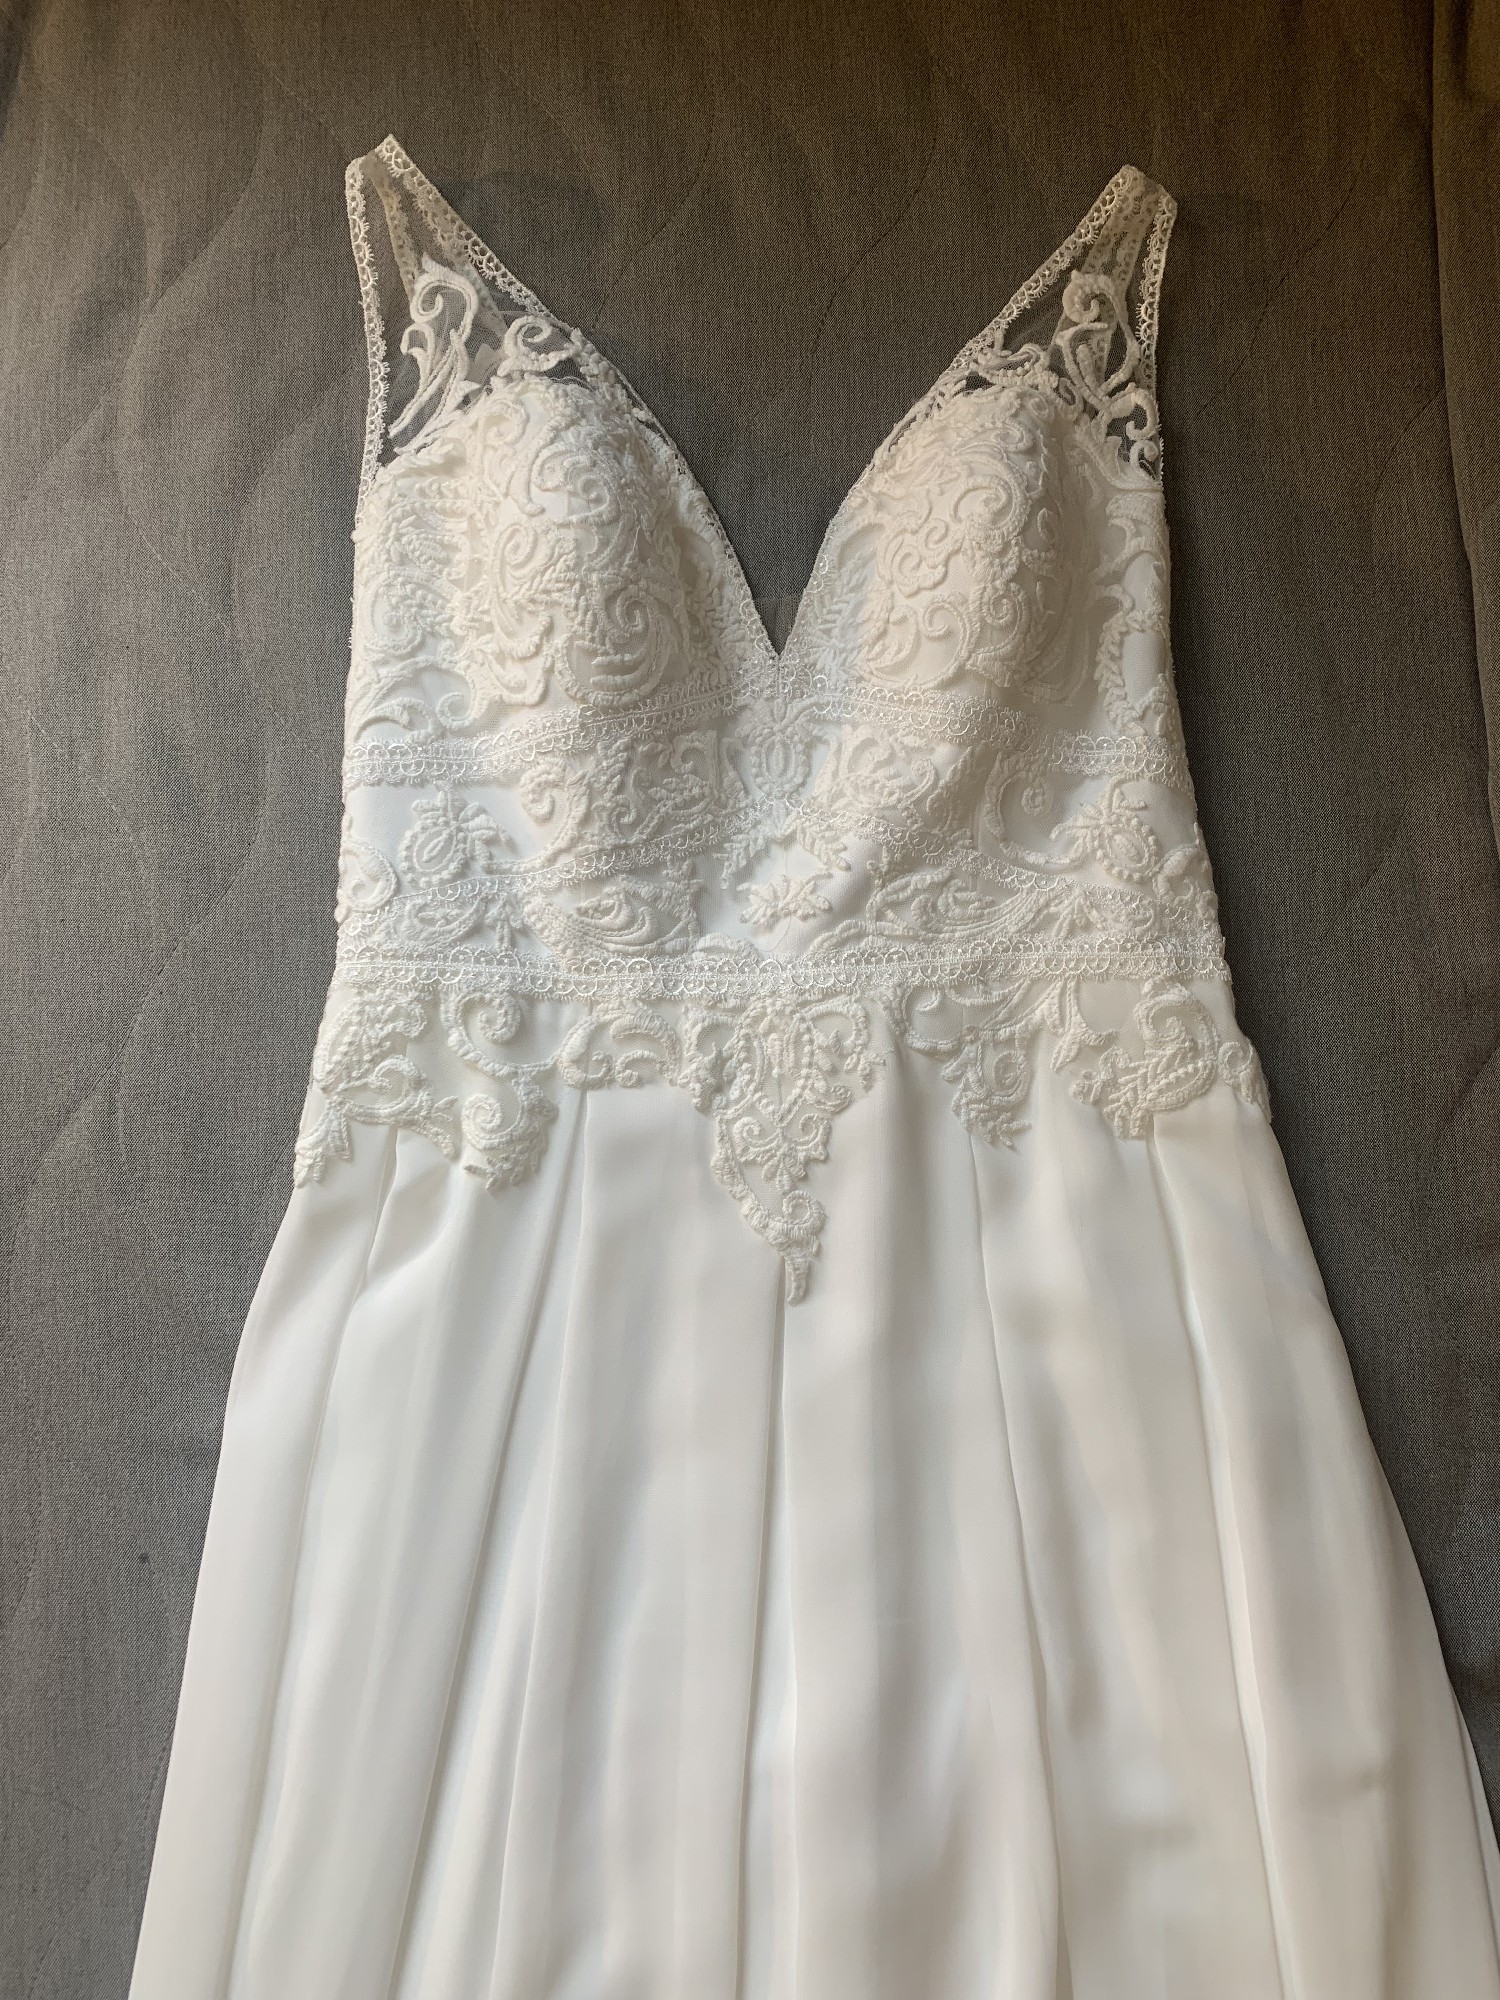 The White One New Wedding Dress Save 70% - Stillwhite